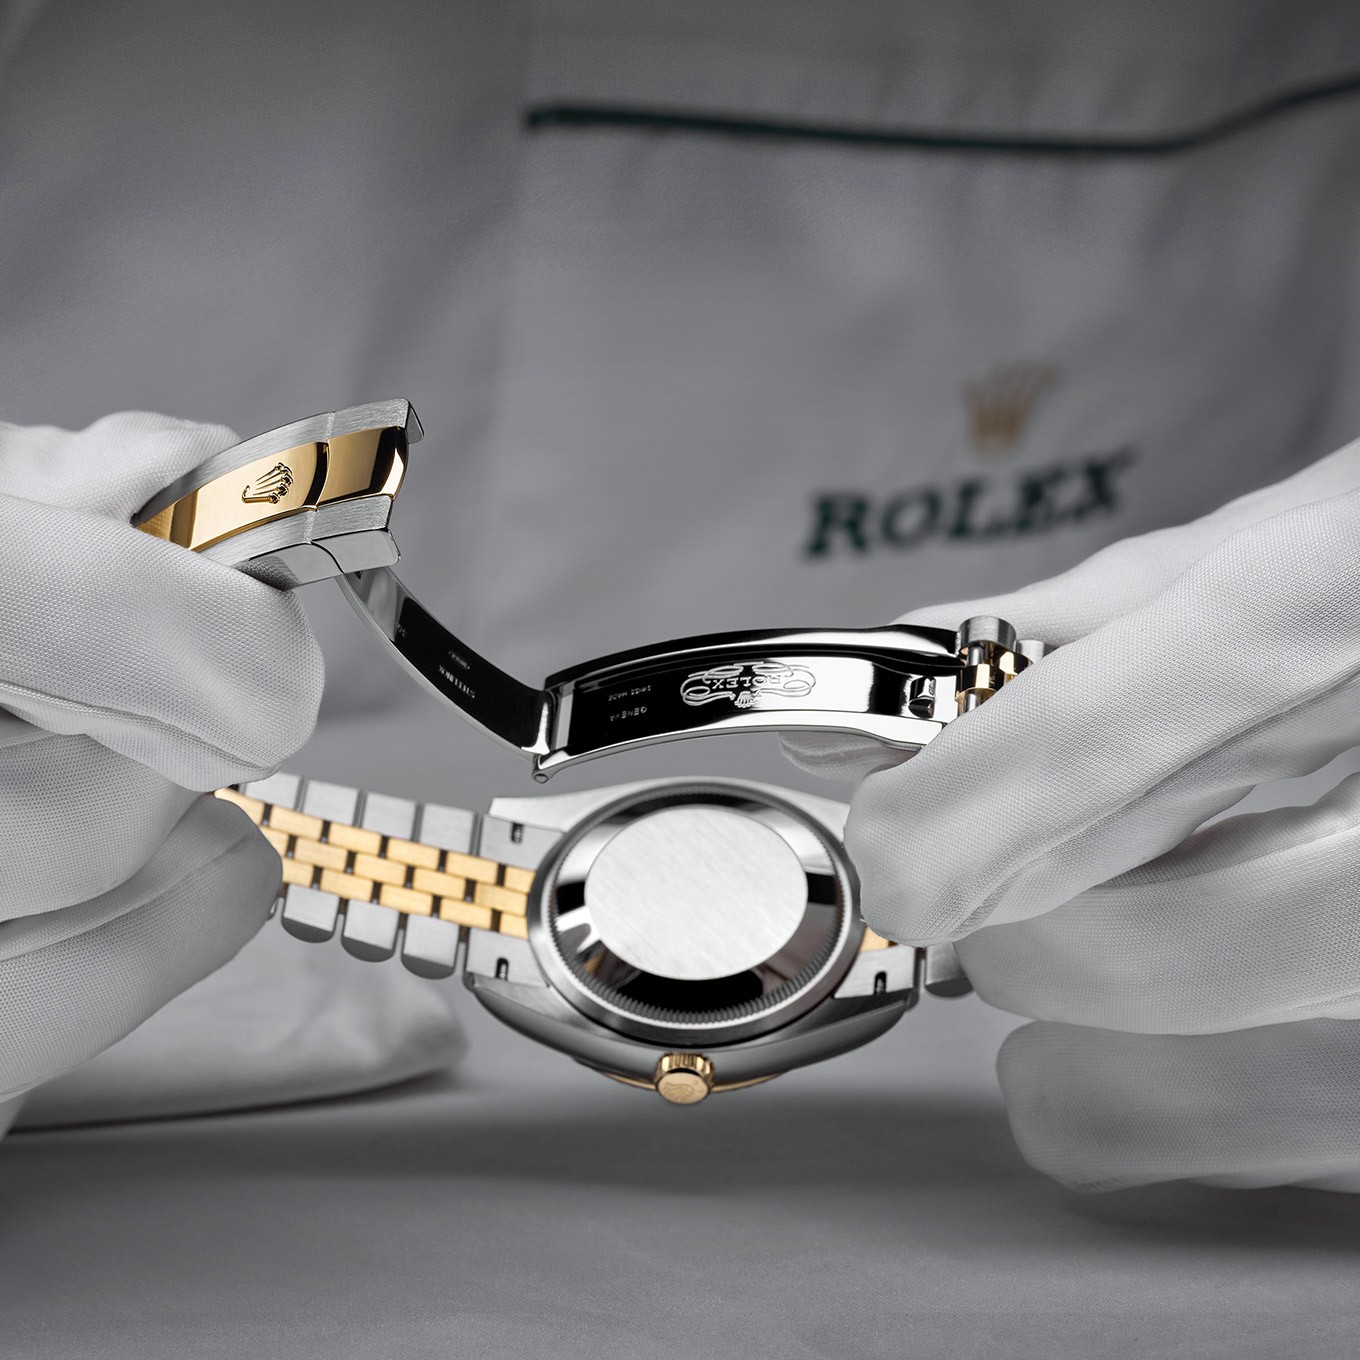 Servicing your Rolex procedure.